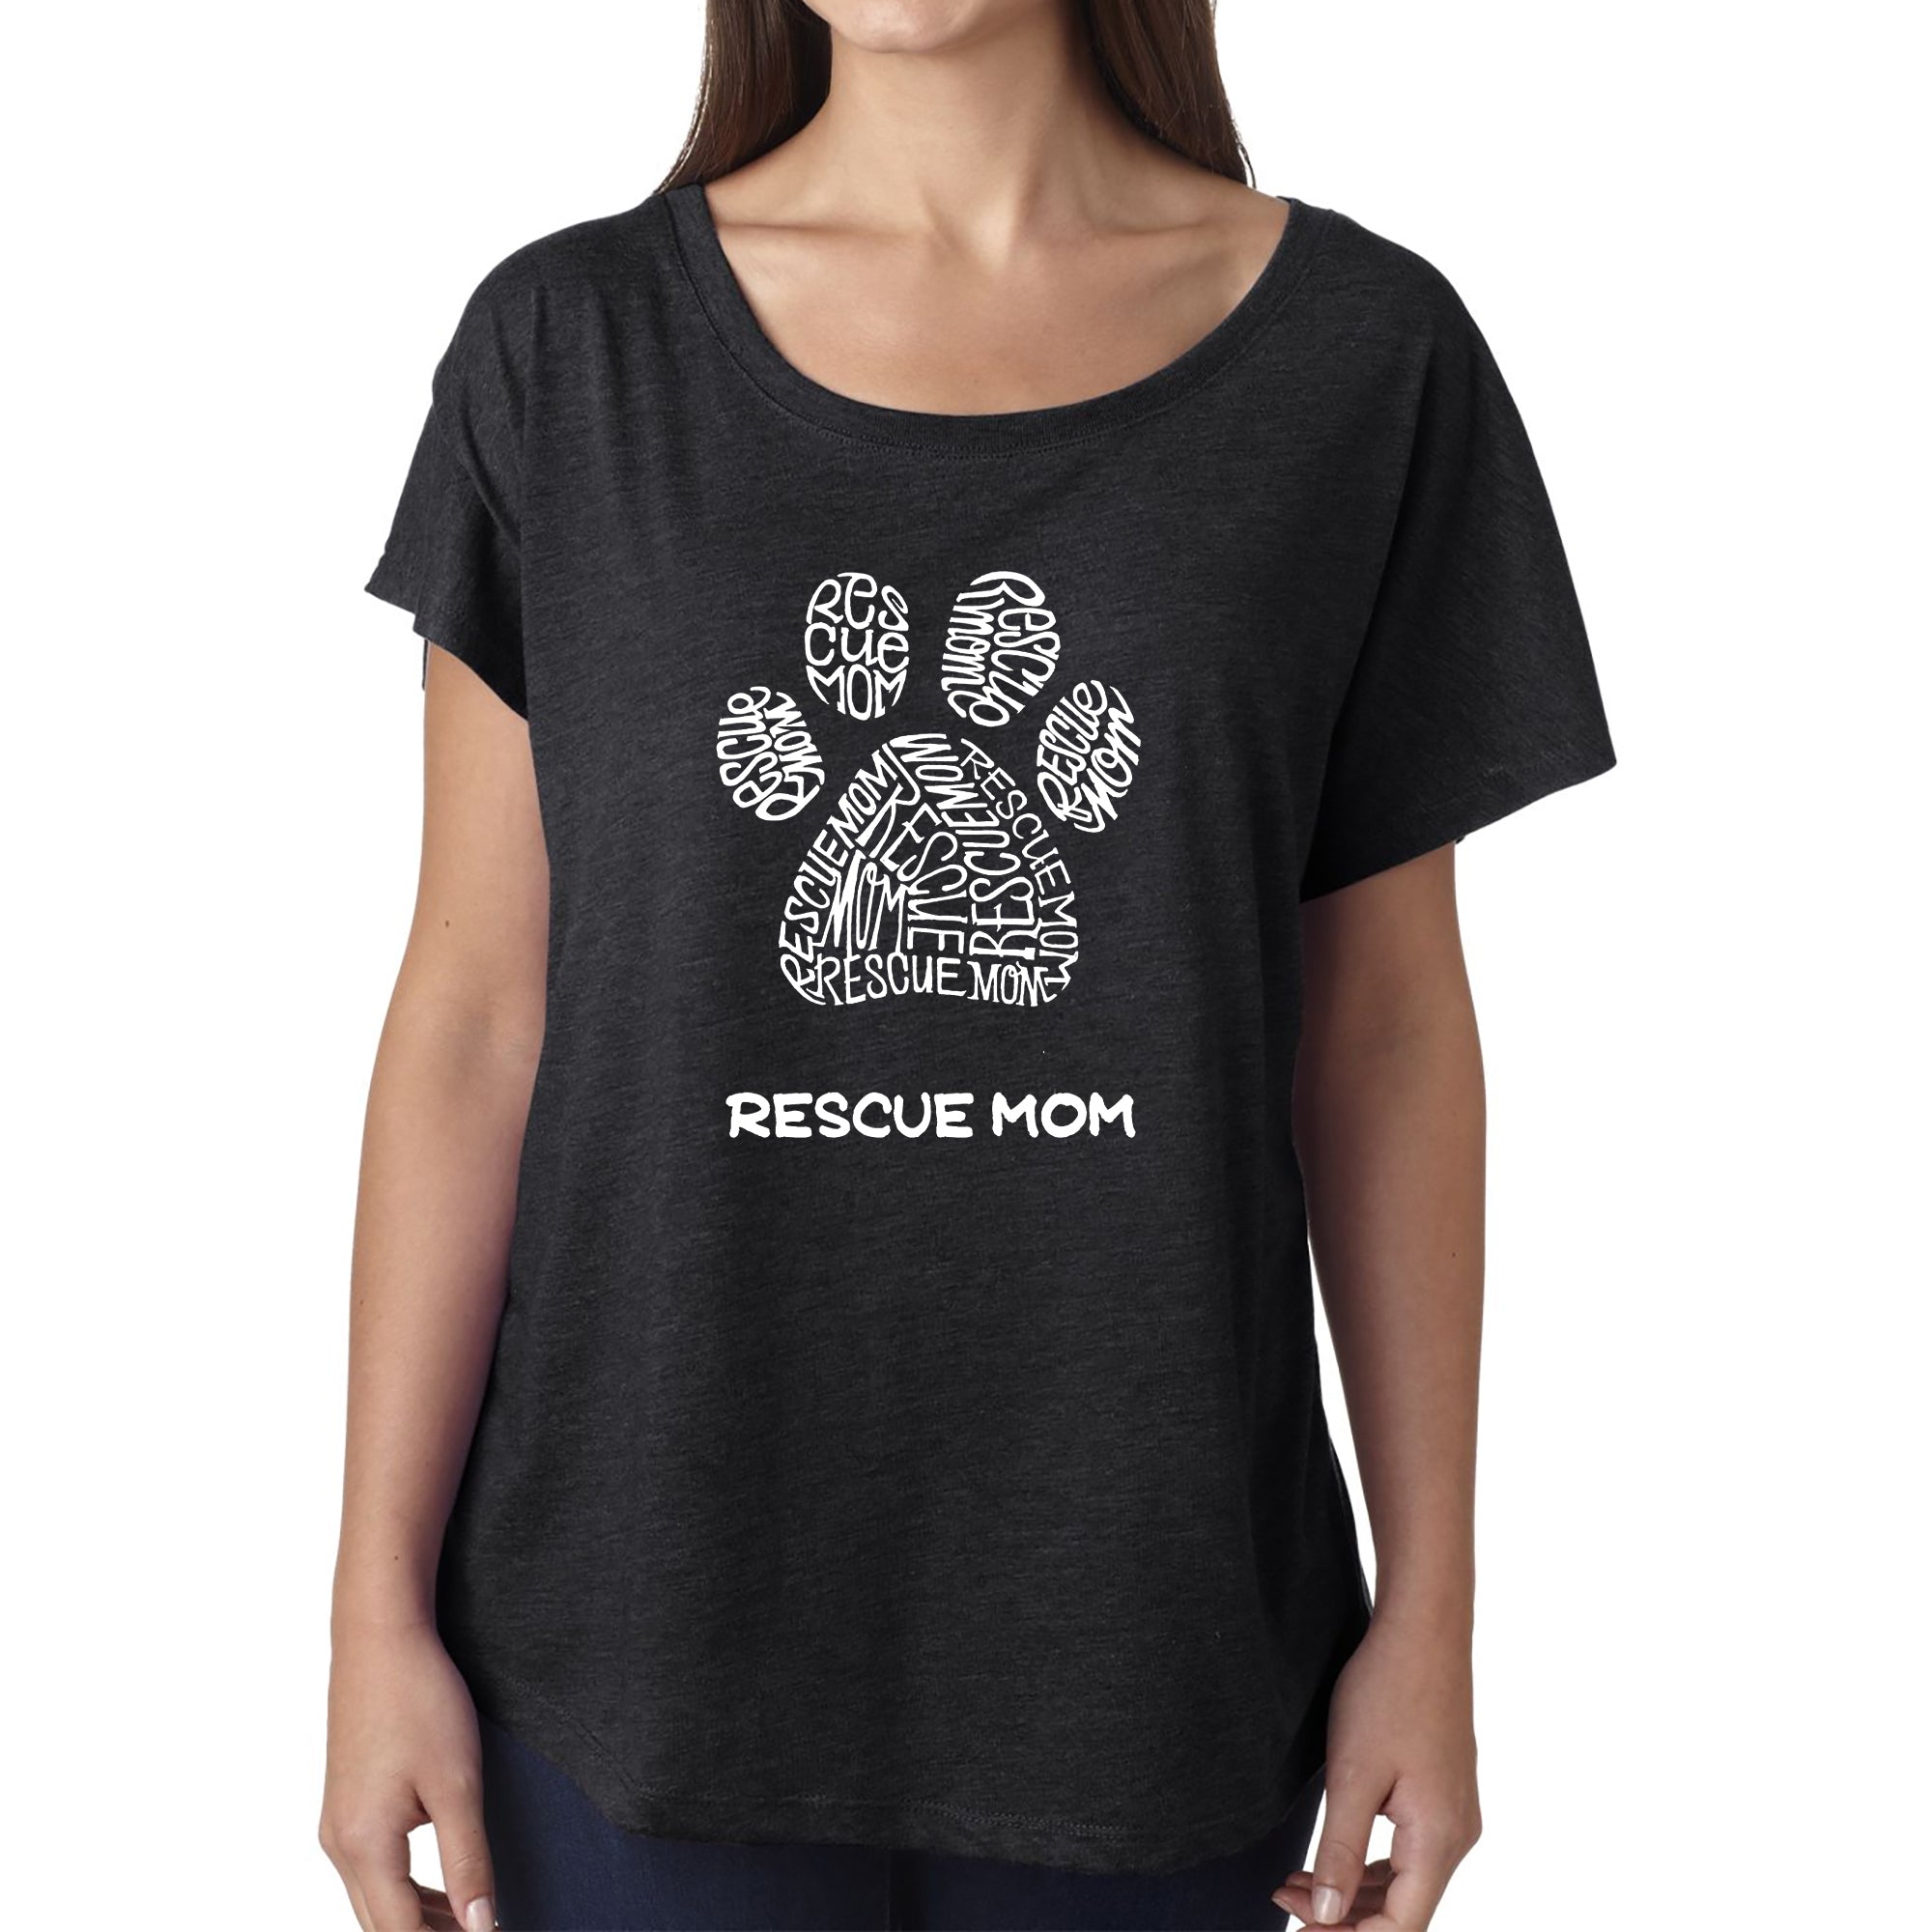 Rescue Mom - Women's Loose Fit Dolman Cut Word Art Shirt - Black - X-Large